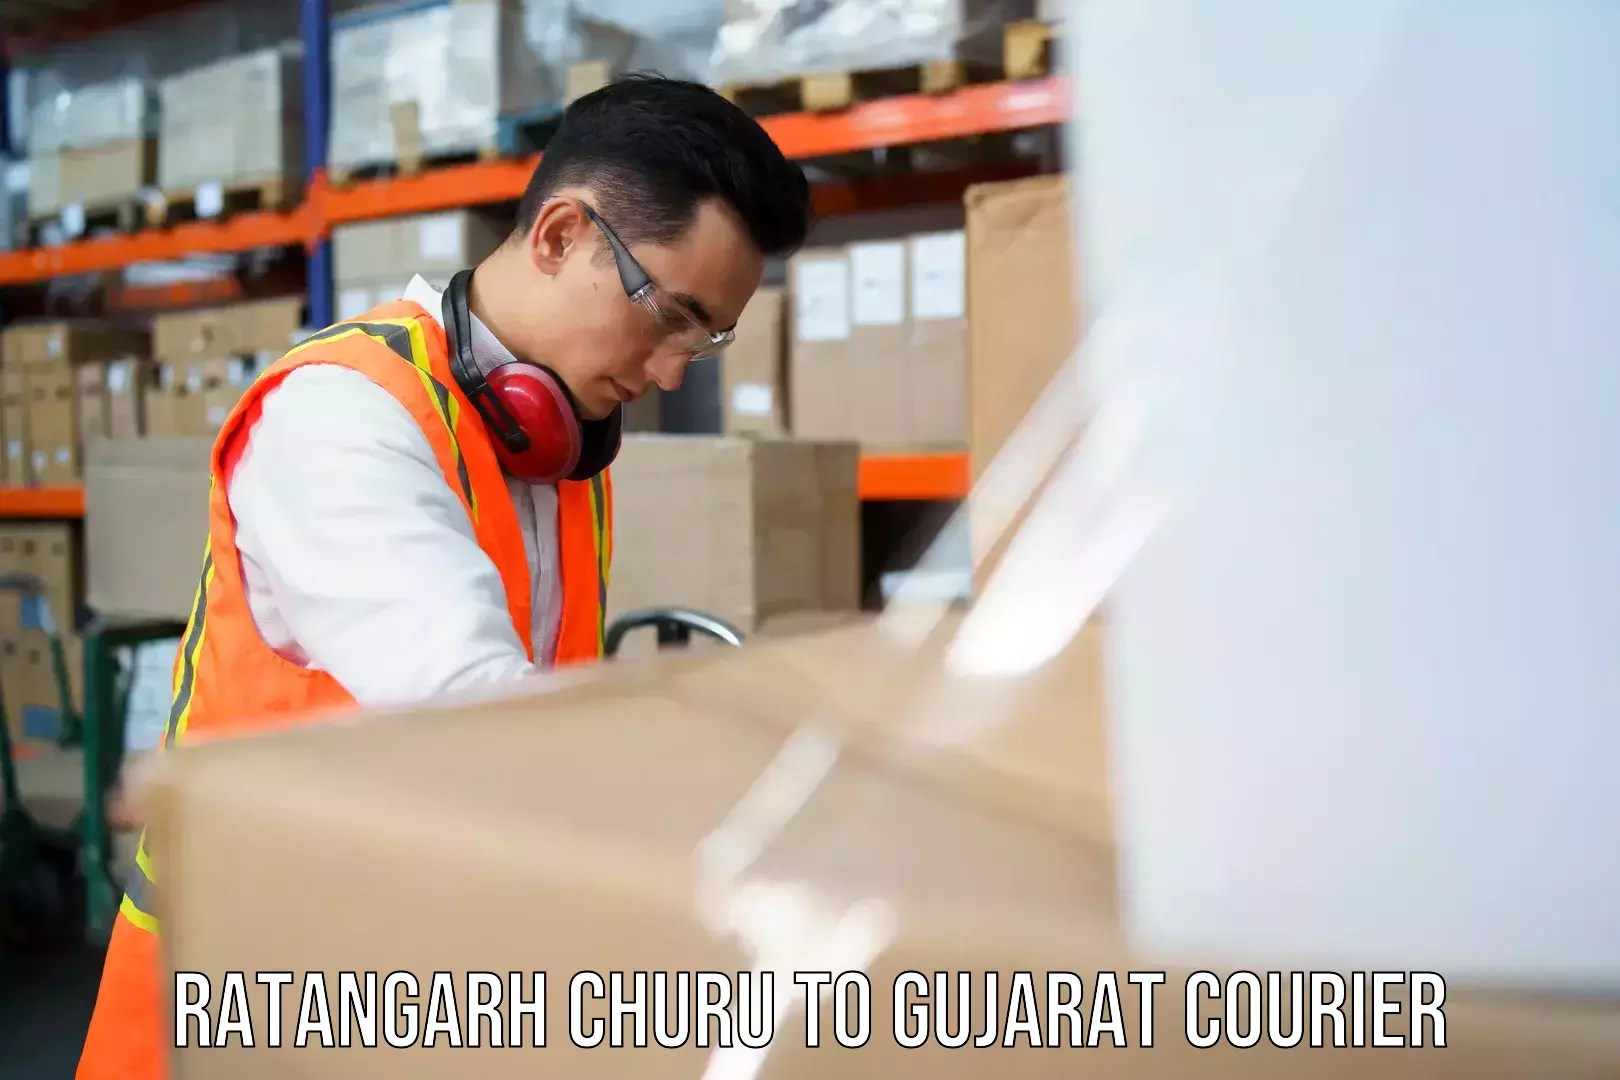 Global courier networks Ratangarh Churu to Morbi